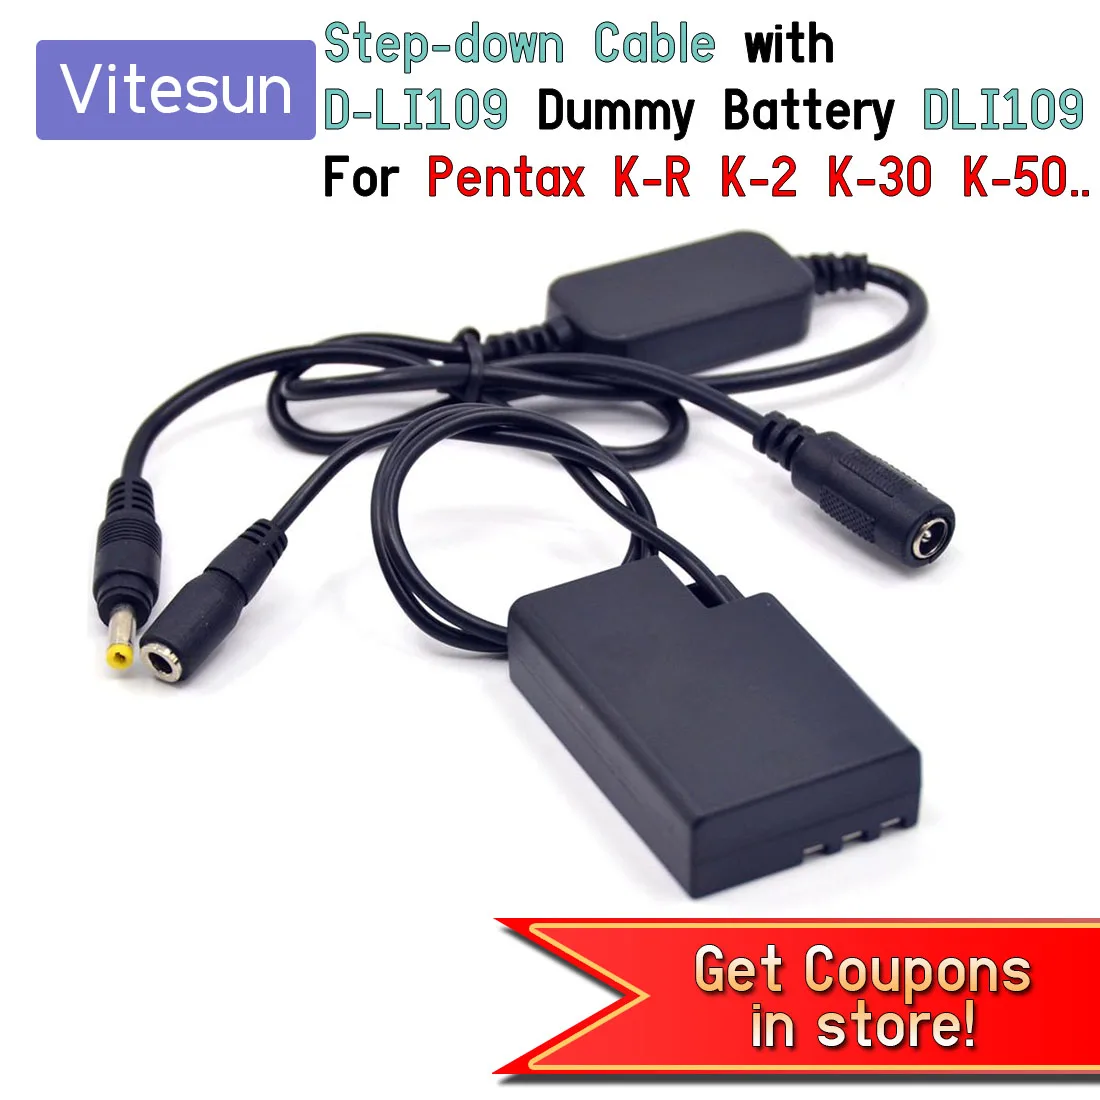 

Vitesun 12V-24V step-down Cable 8V + D-LI109 DLI109 Dummy Battery DC128 DC Coupler for Pentax K-R K-2 K-30 K-50 Cameras